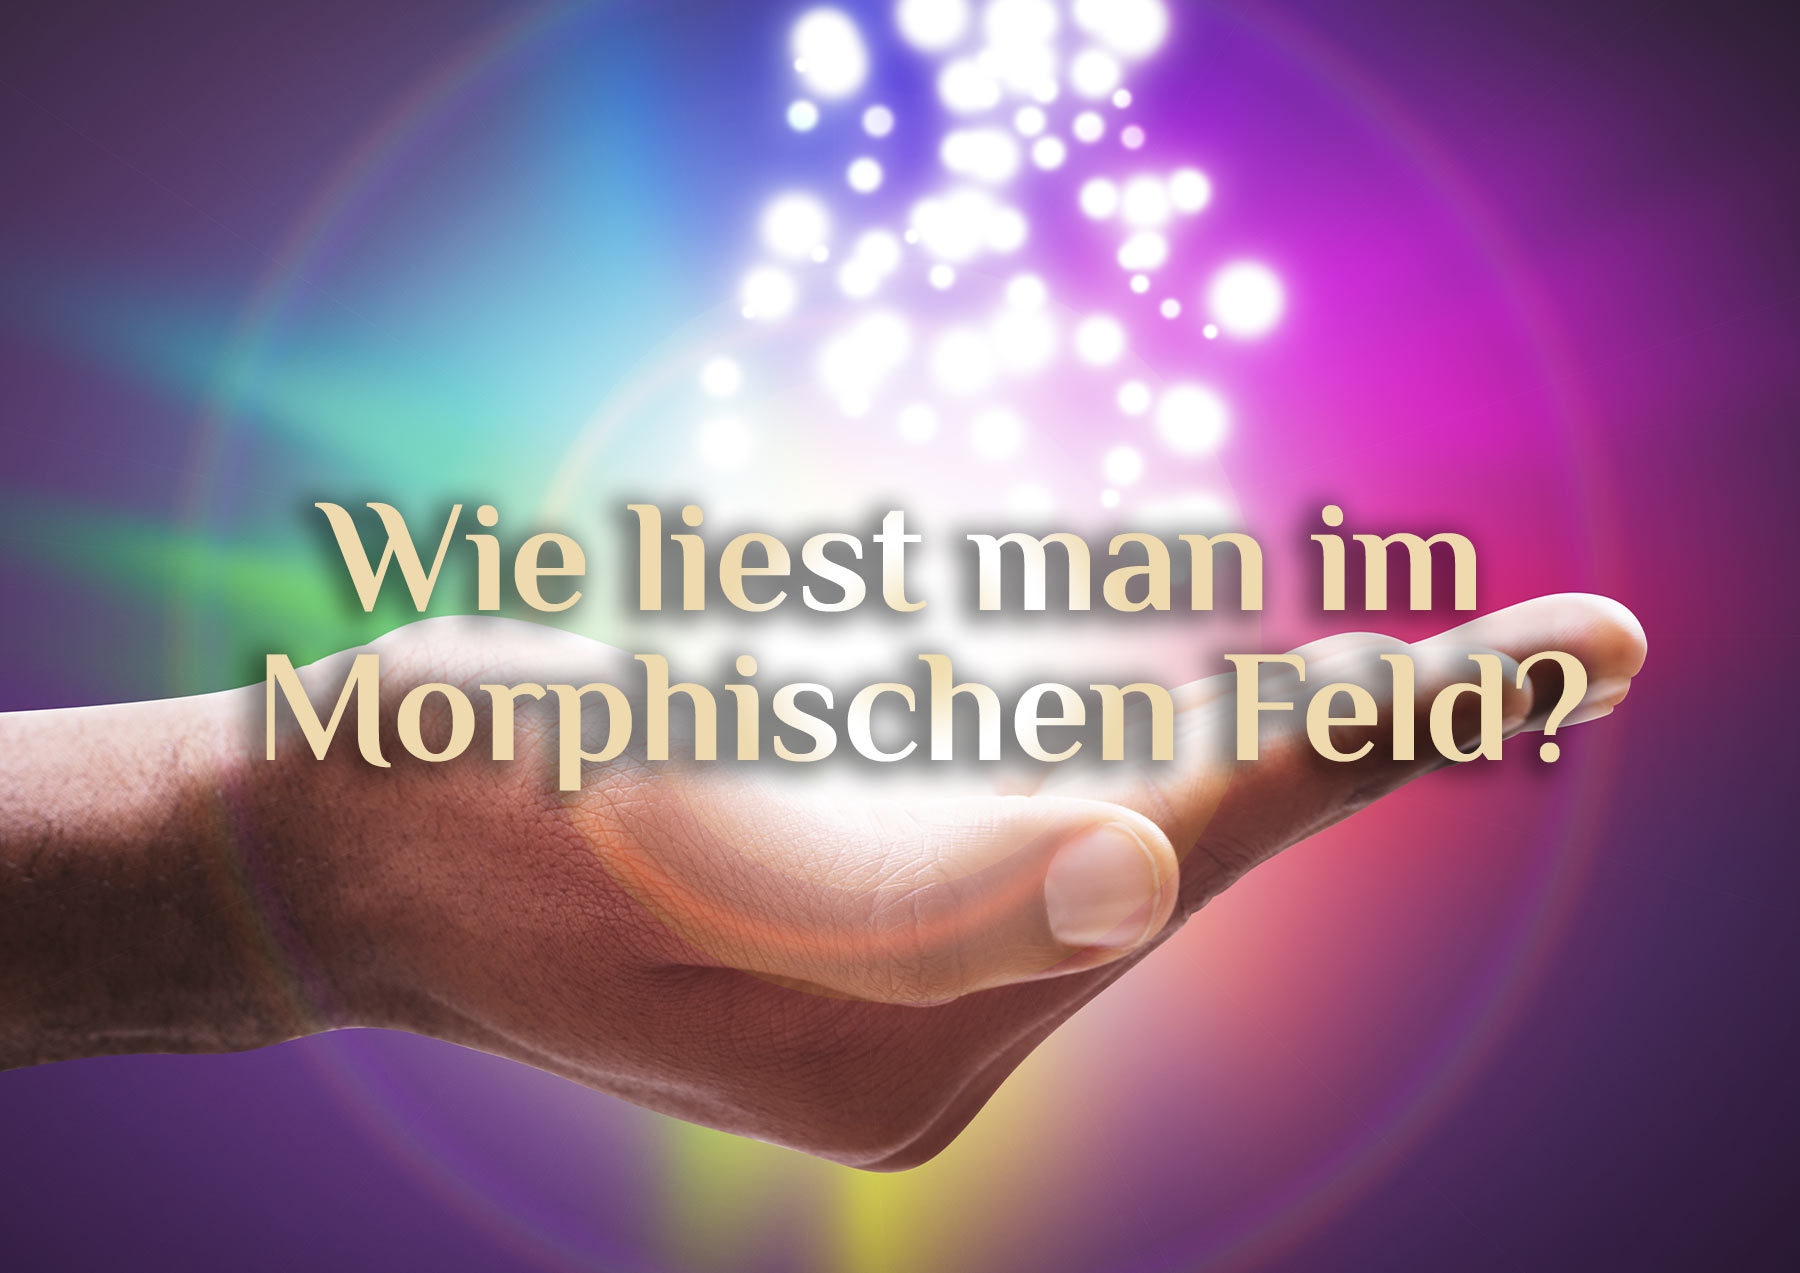 Das Morphische Feld 🛡️ Lesen im morphogenetischen Feld 🛡️ “Morphic Field”